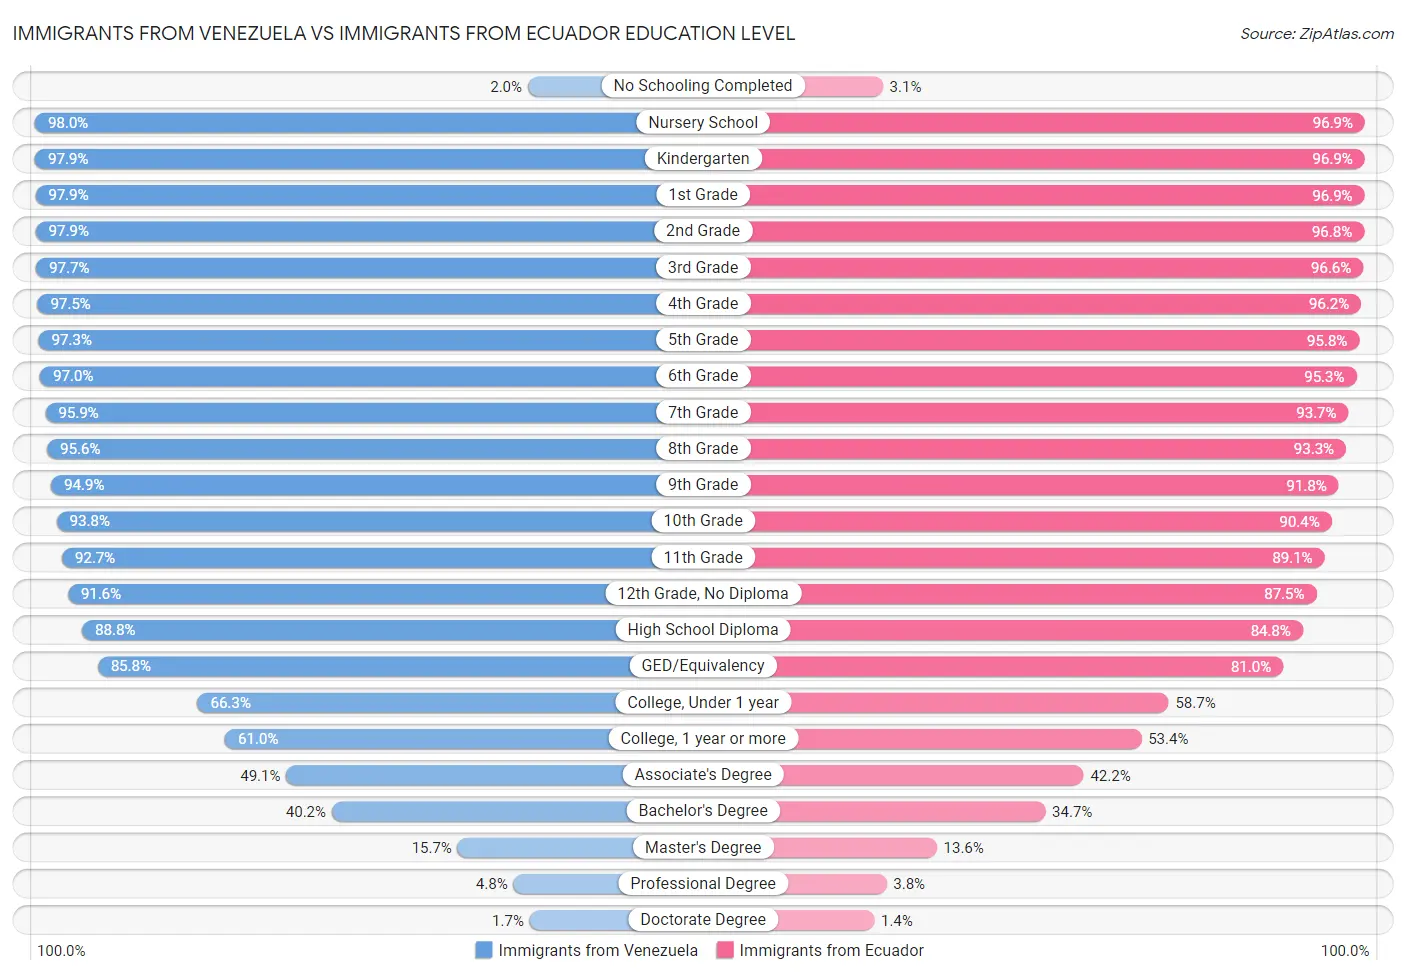 Immigrants from Venezuela vs Immigrants from Ecuador Education Level